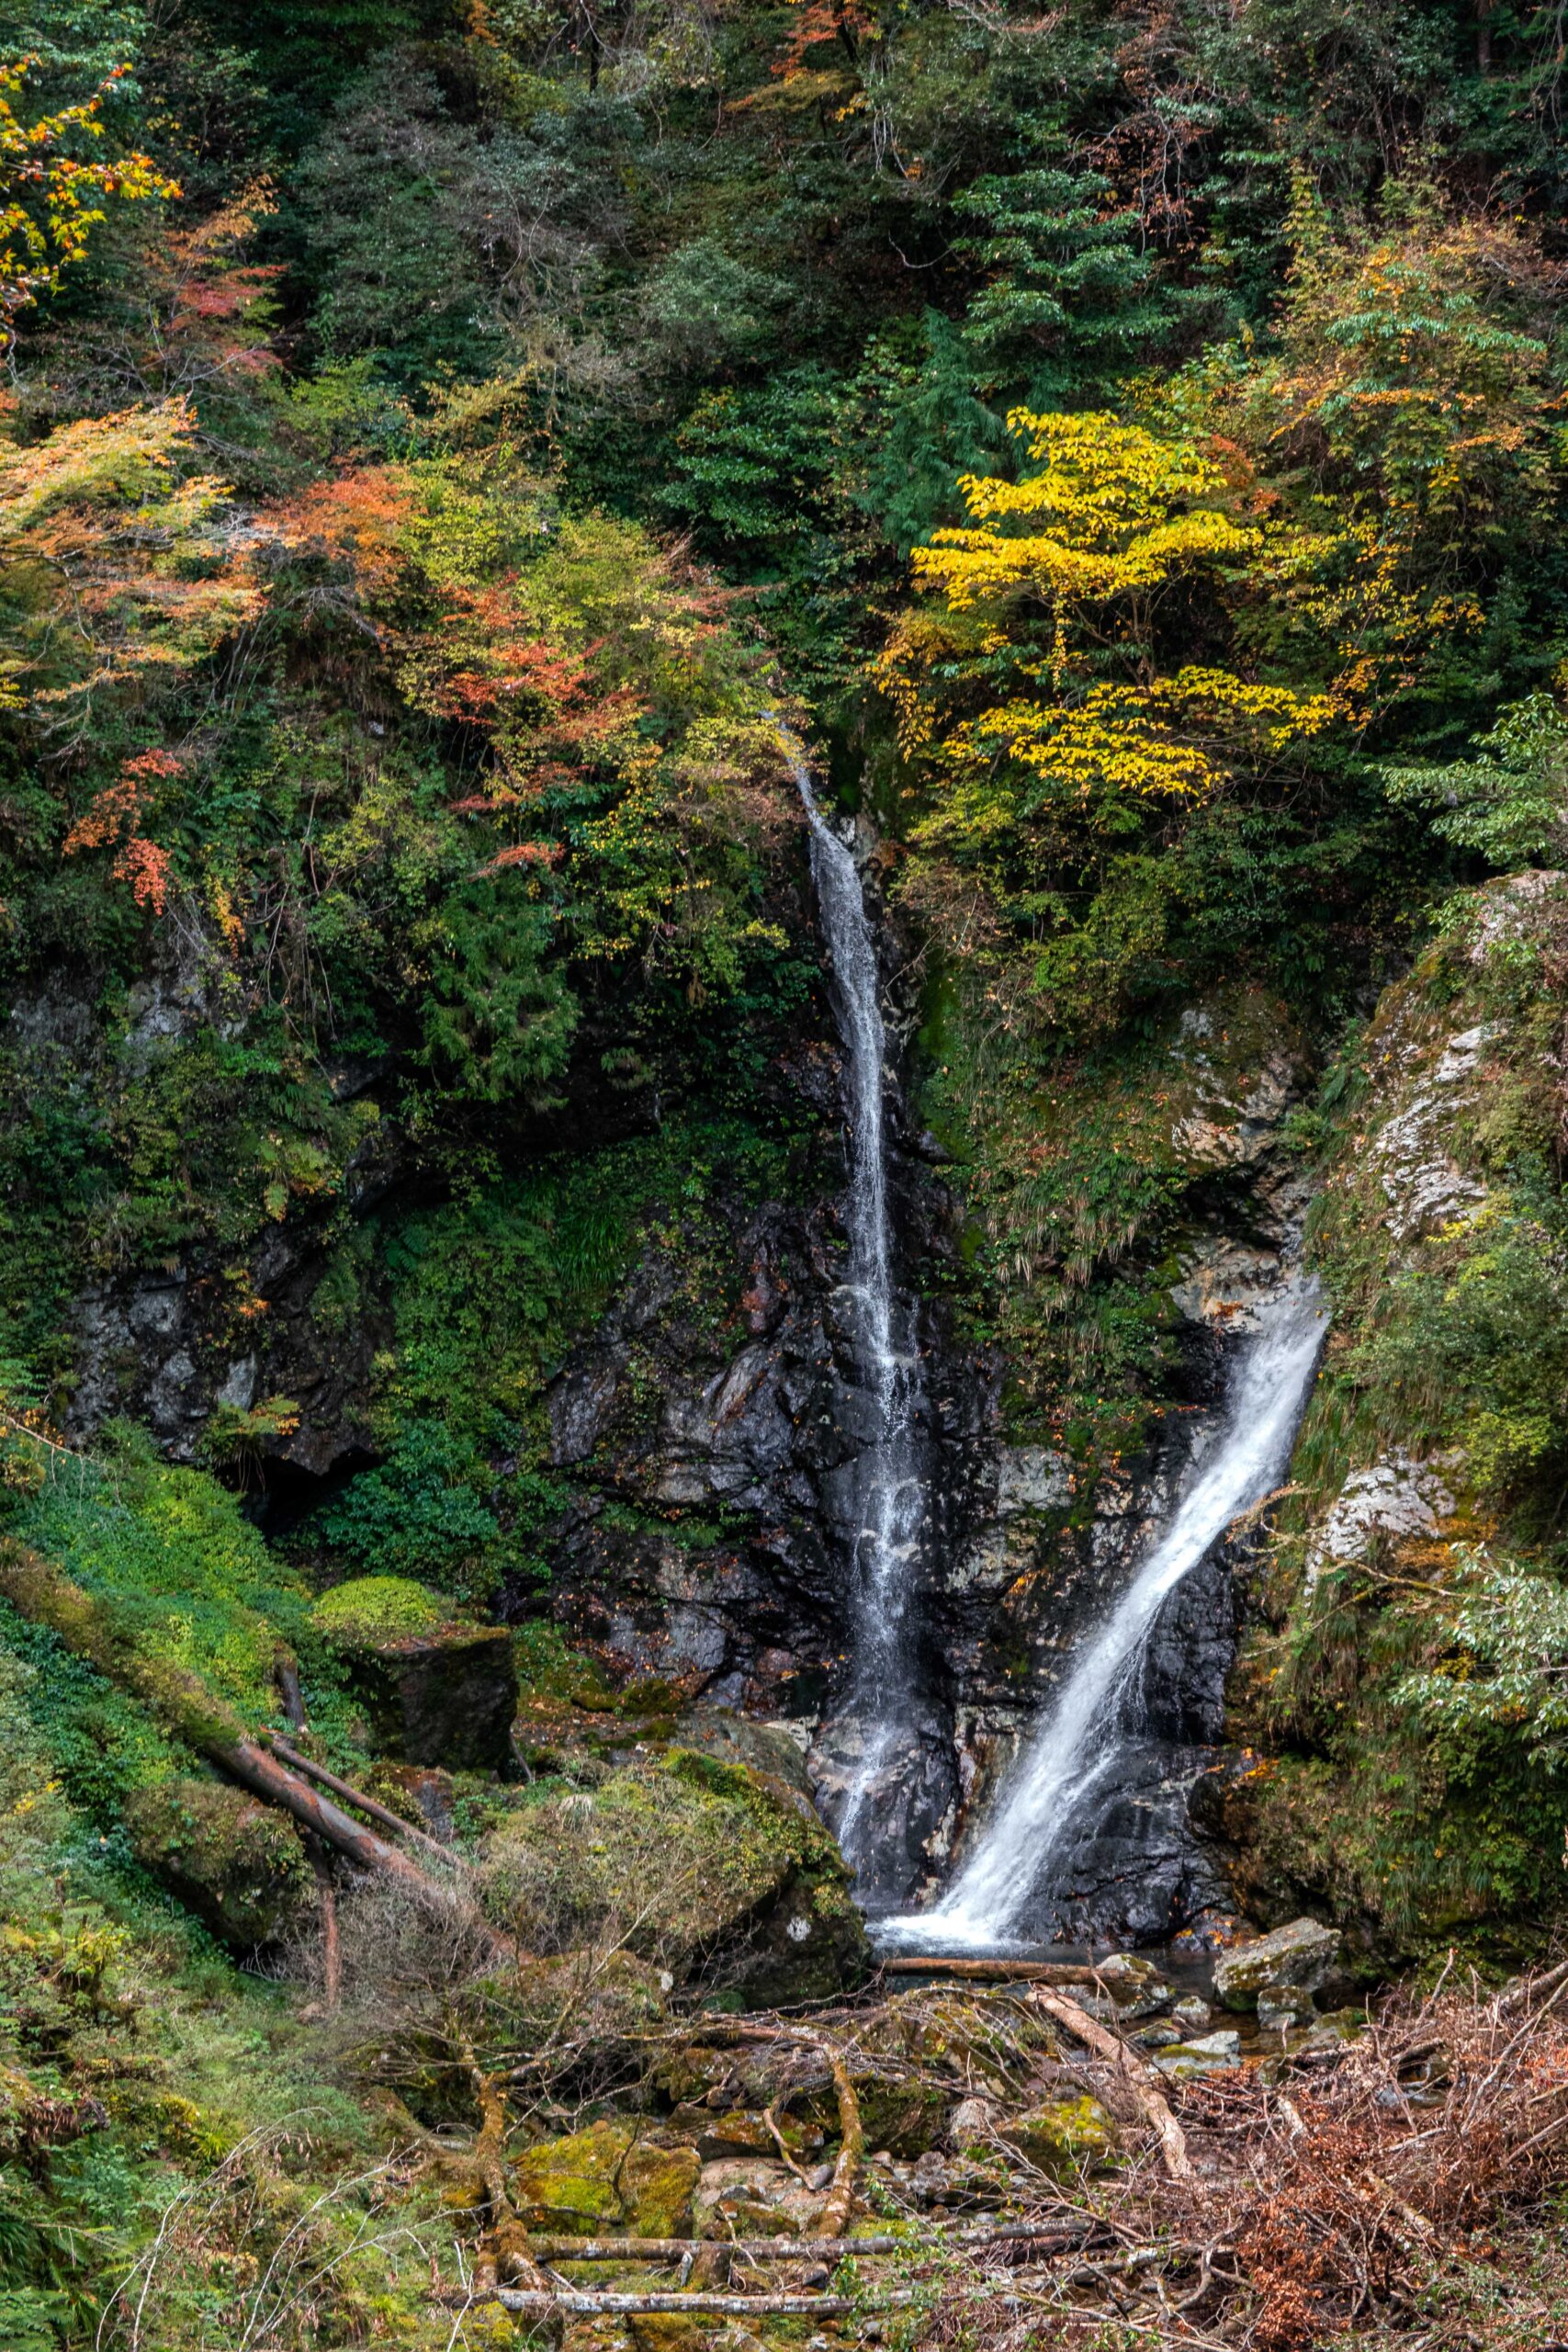 DSC08017-scaled 兵庫県  原不動滝(日本の滝100選に選定された紅葉景色の美しい絶景の滝 ! 撮影した写真の紹介、 アクセス情報など)　